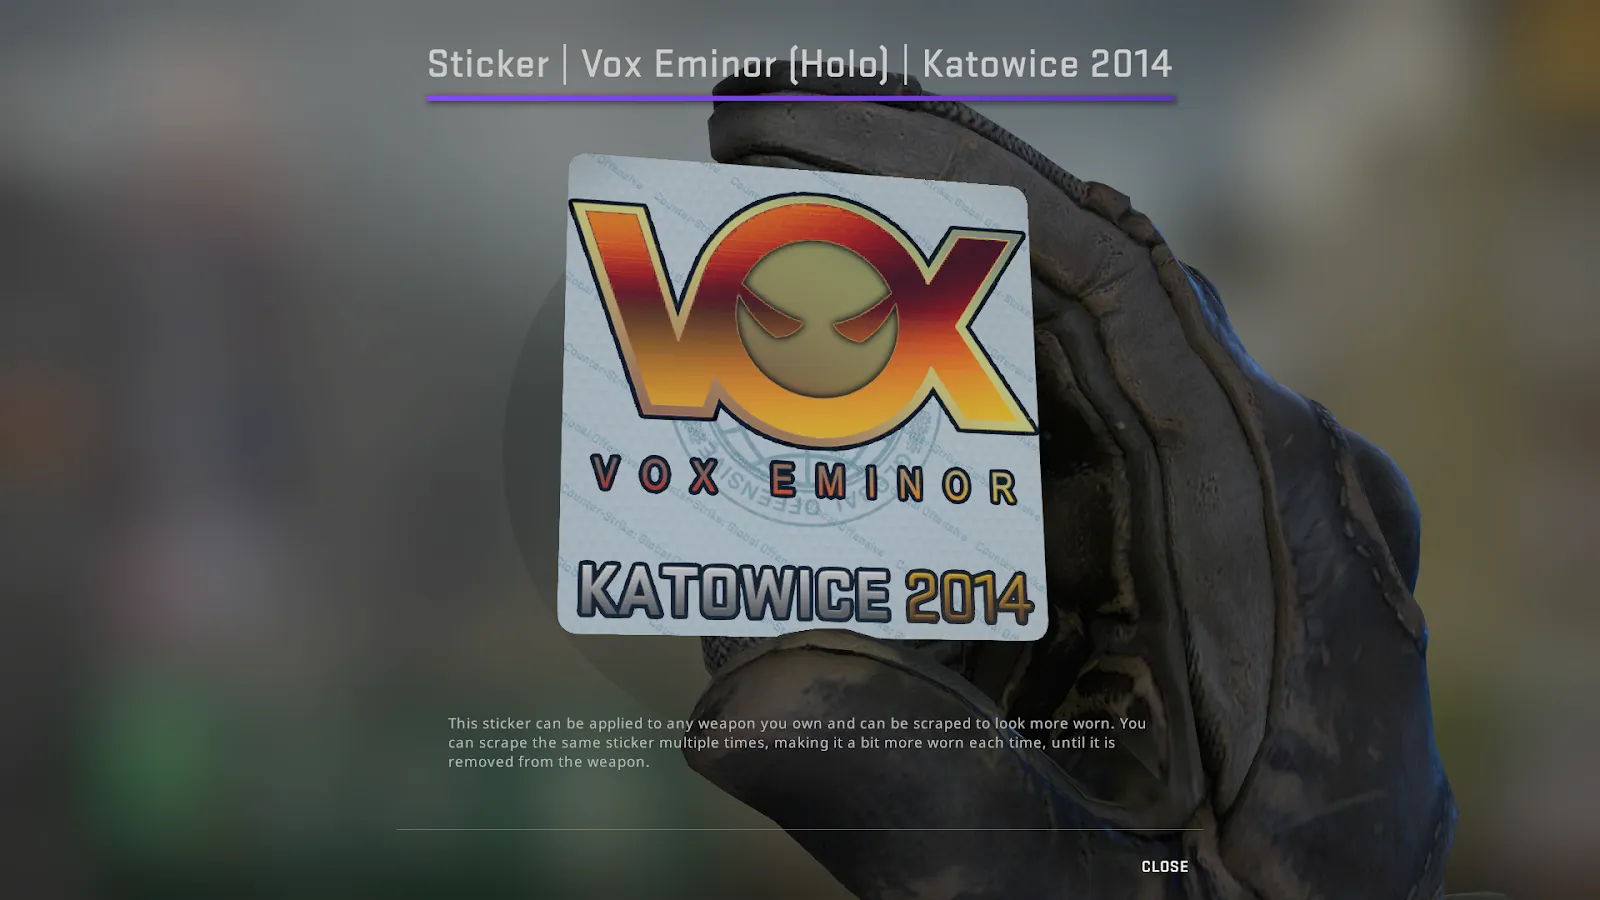 Vox Eminor Holo Katowice 2014 Sticker